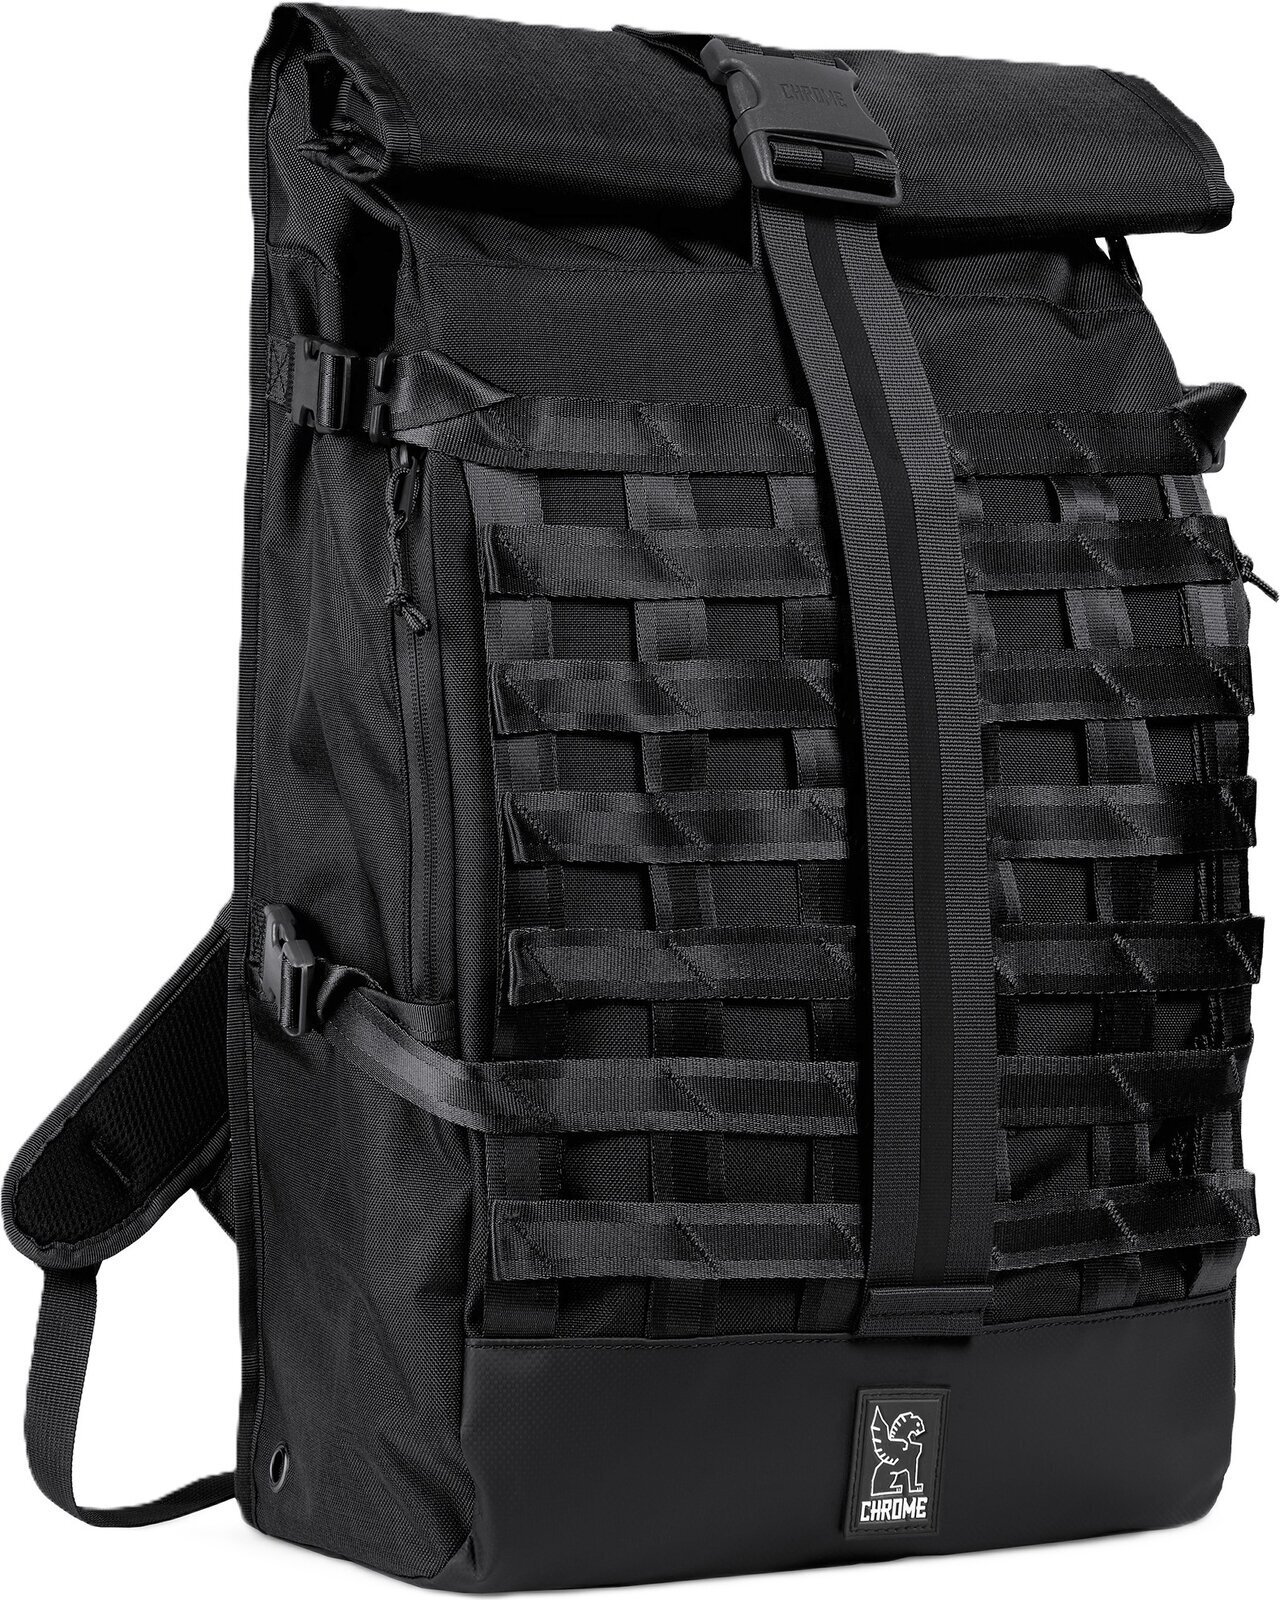 Mochila/saco de estilo de vida Chrome Barrage Backpack Black 34 L Mochila